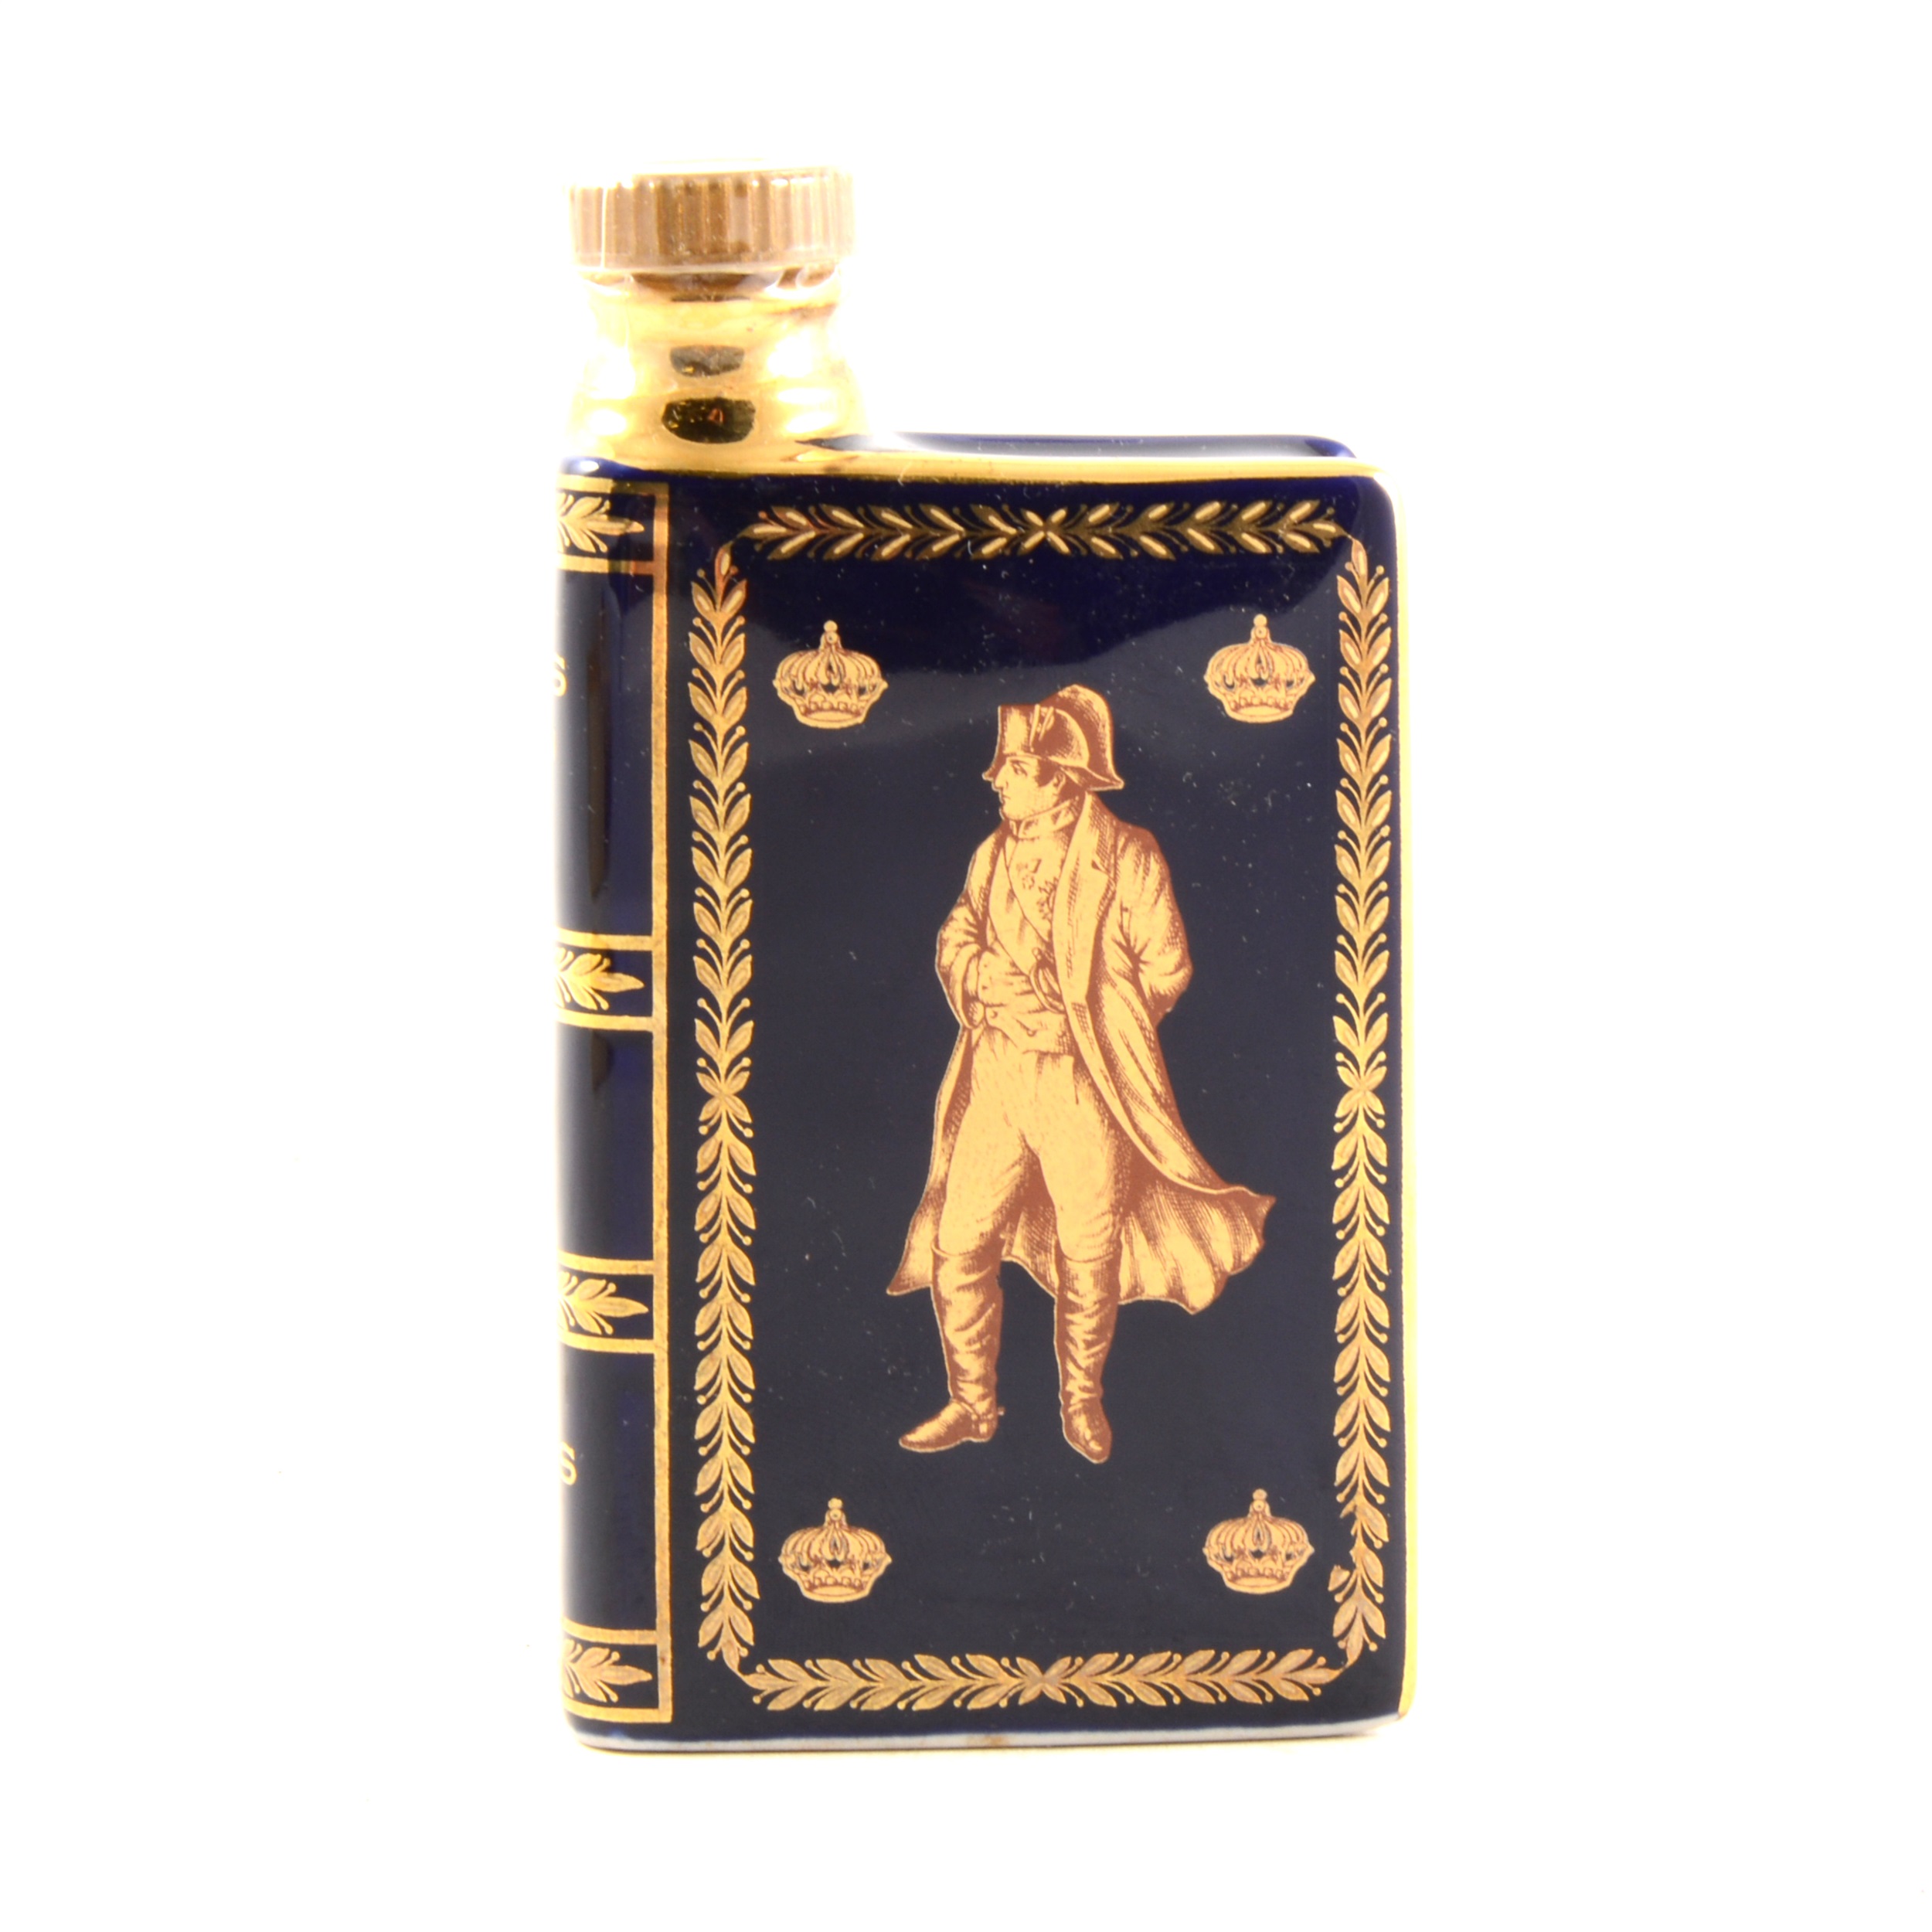 Lot 144 - Cognac Camus Napoleon, limited edition